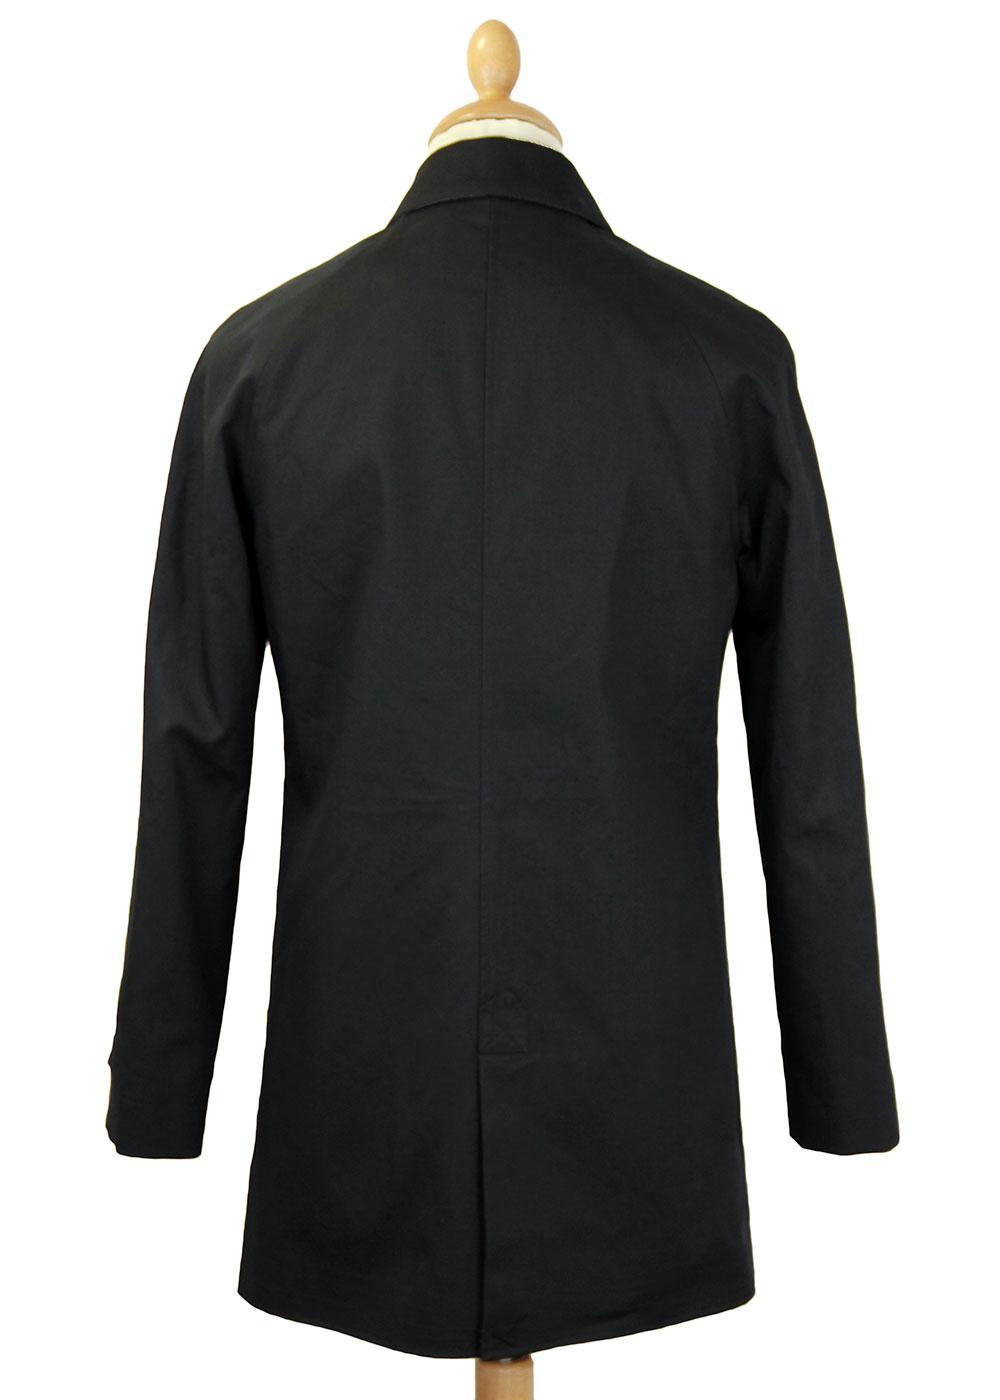 PETER WERTH Twyford Retro 60s Mod Bonded Cotton Raincoat in Black